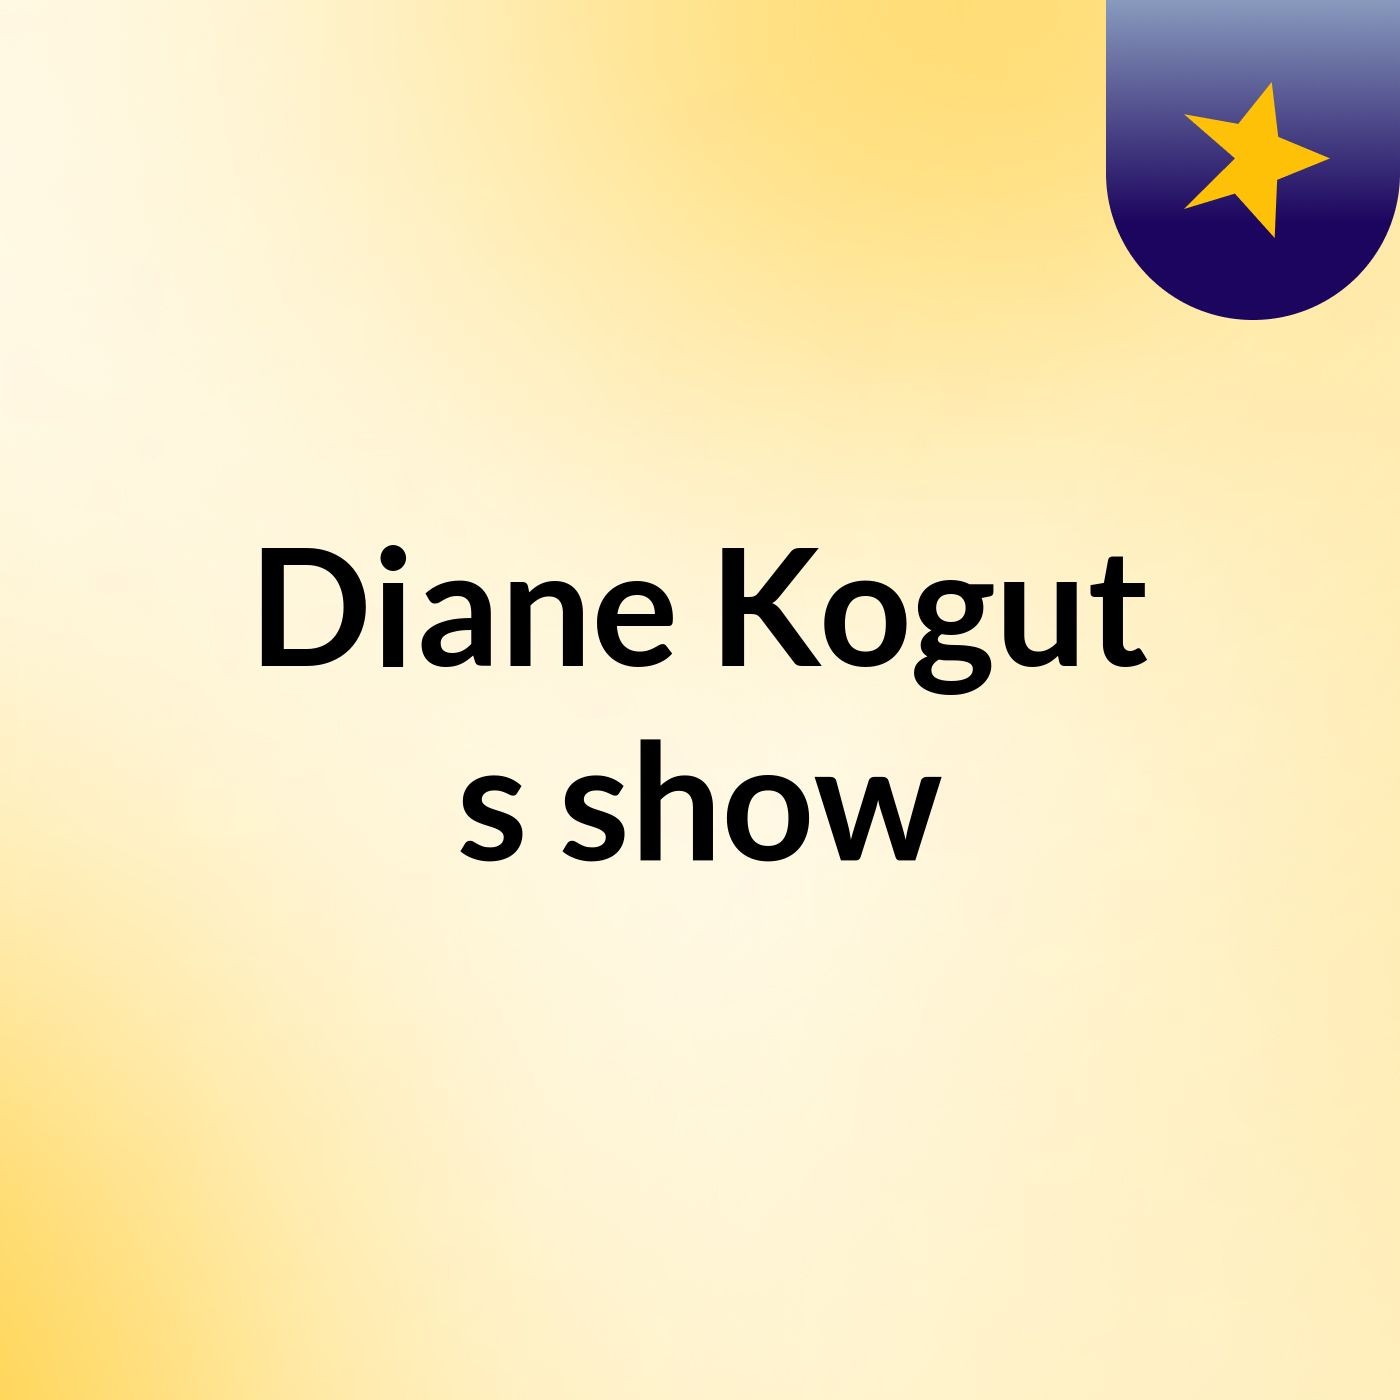 Diane Kogut's show